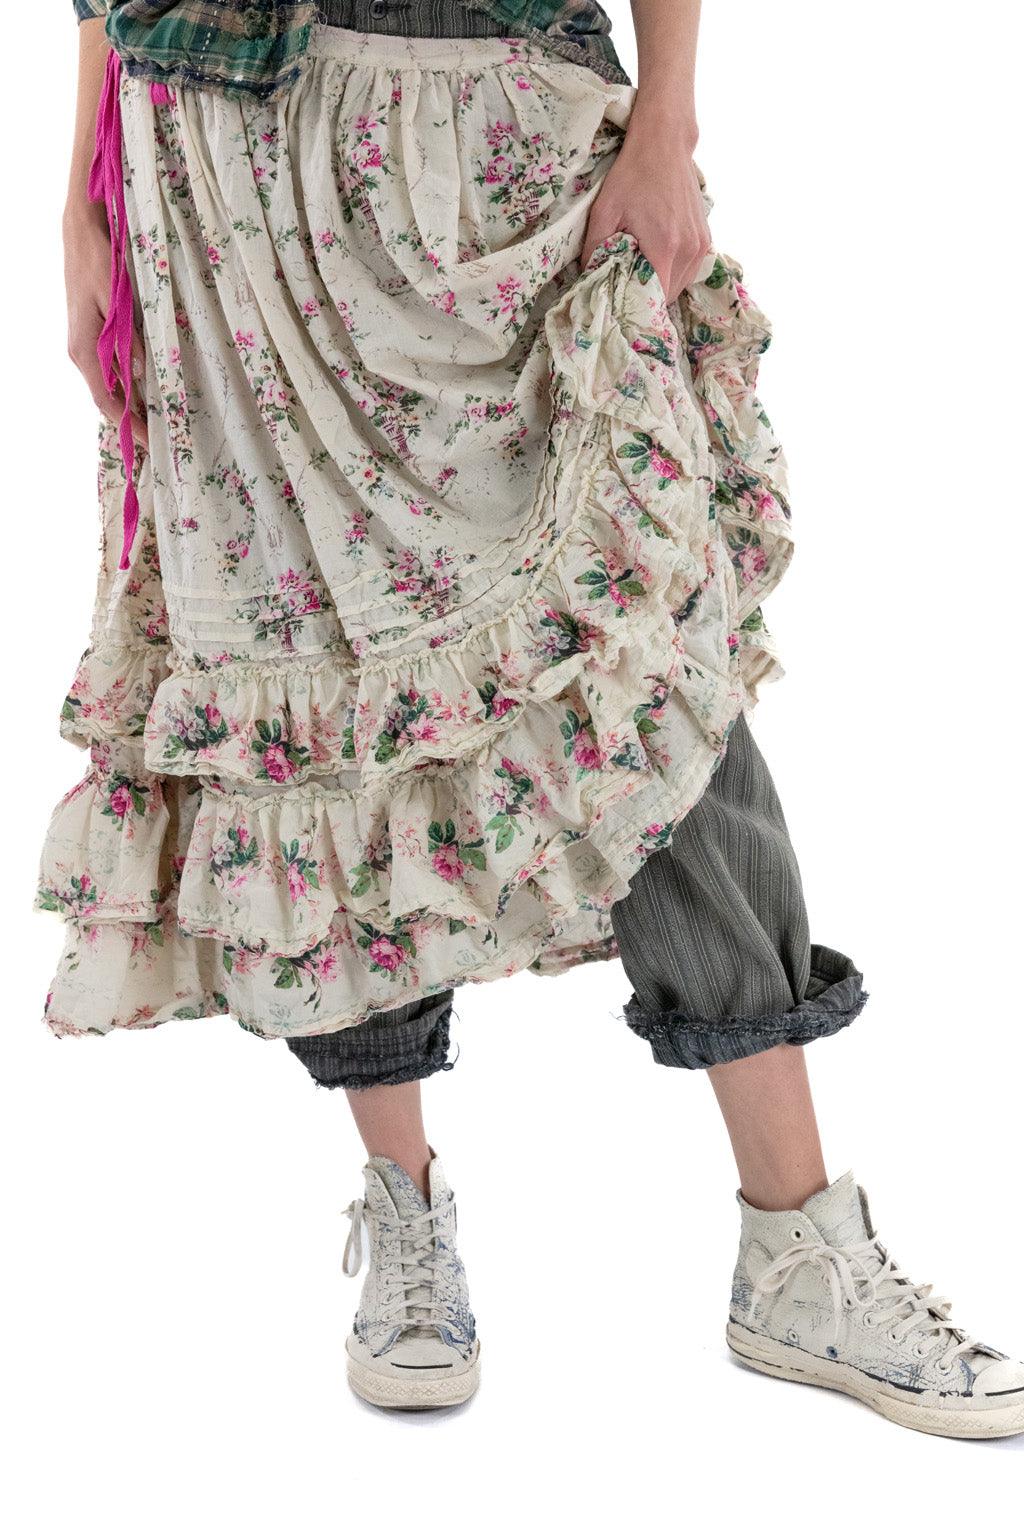 Penelope Ruffle Skirt - Magnolia Pearl Clothing